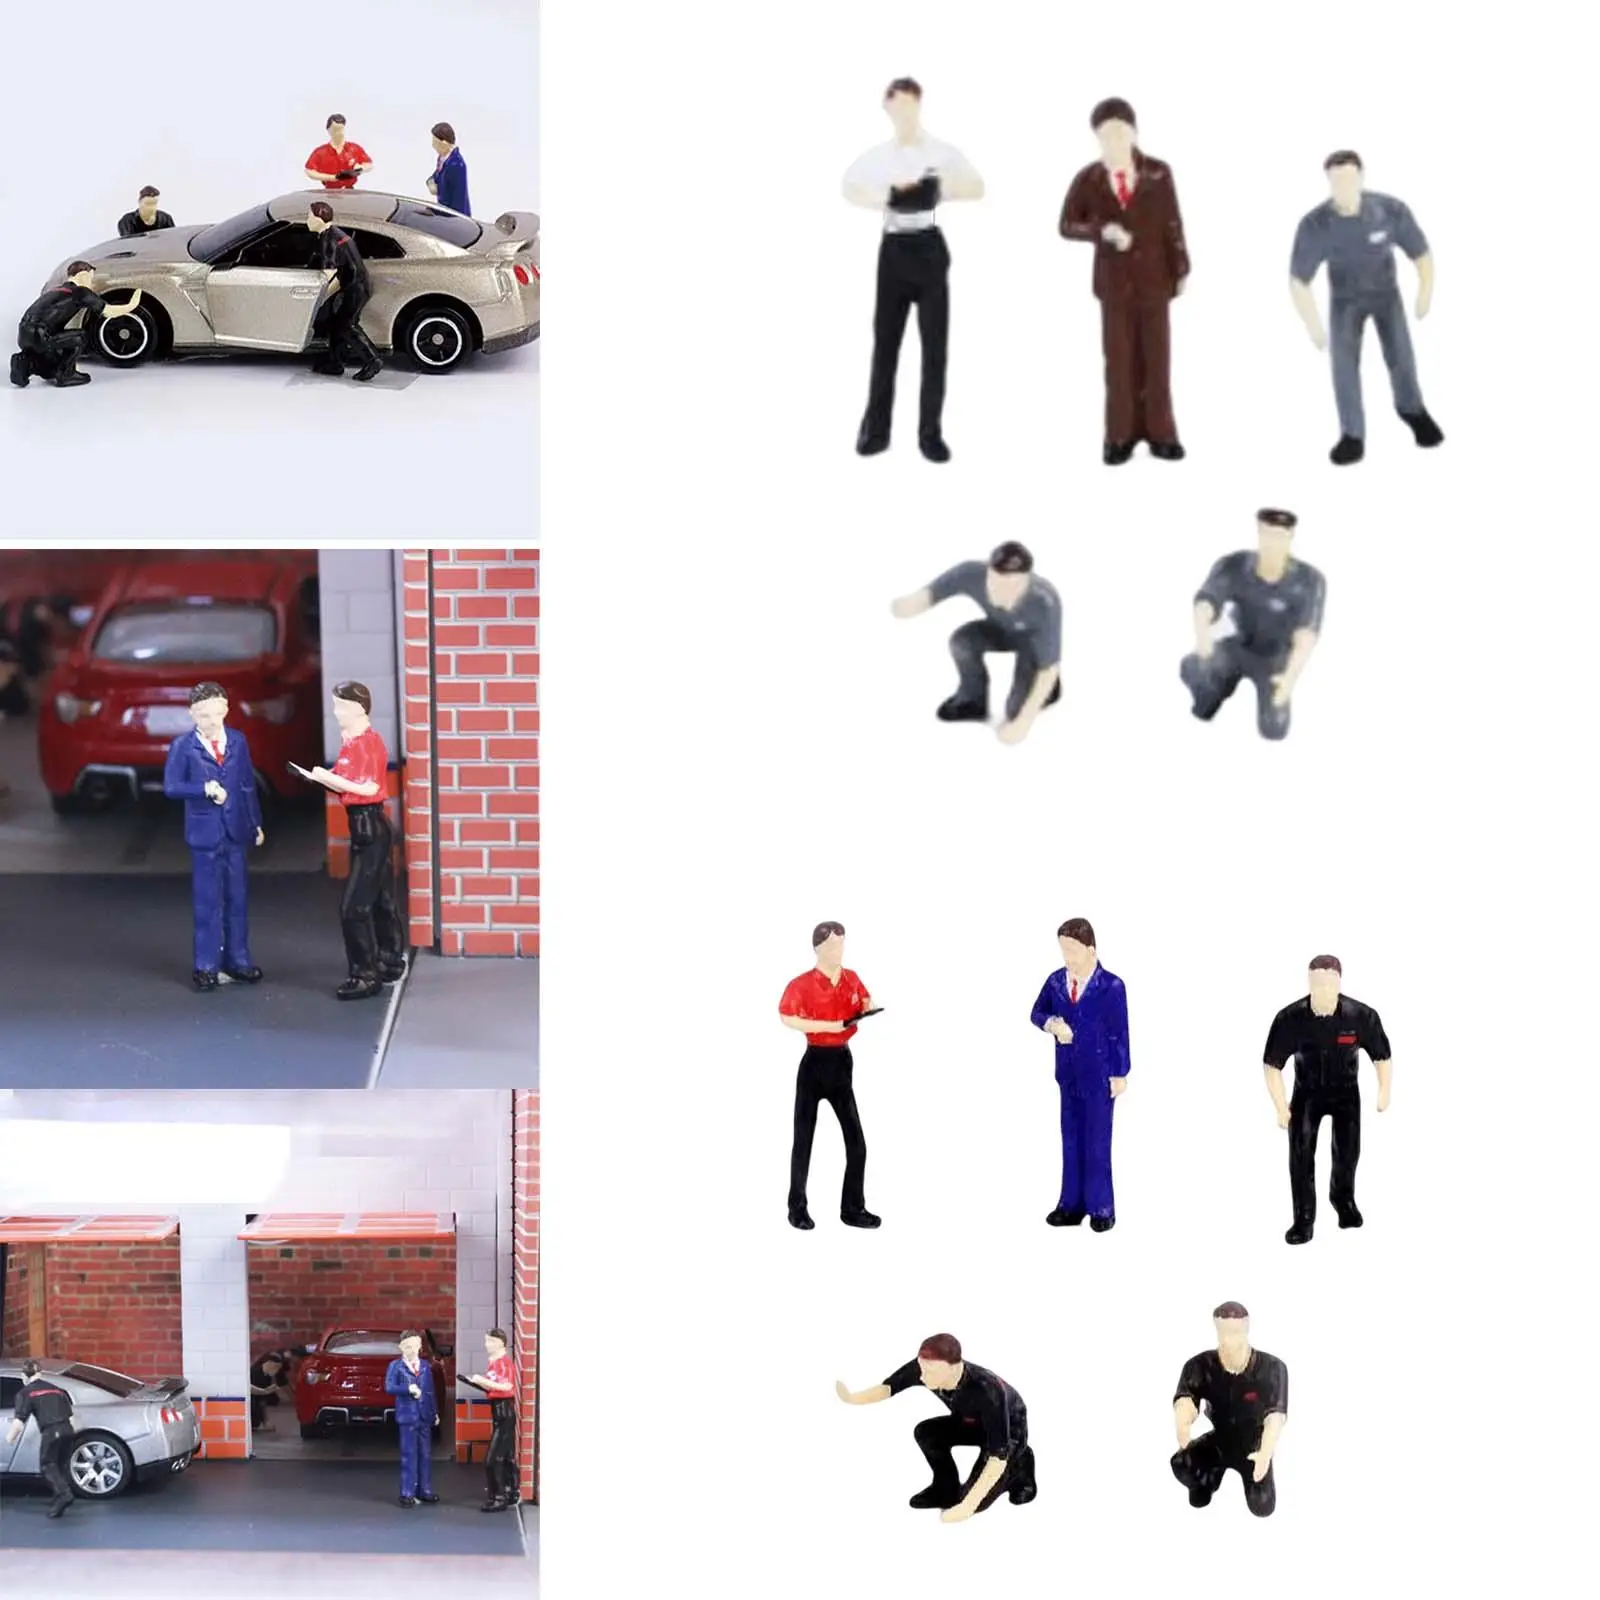 5x Resin 1:64 Repairman Figure S Gauge Desktop Ornament Miniature Scenes Movie Props Collections Layout DIY Projects Ornaments